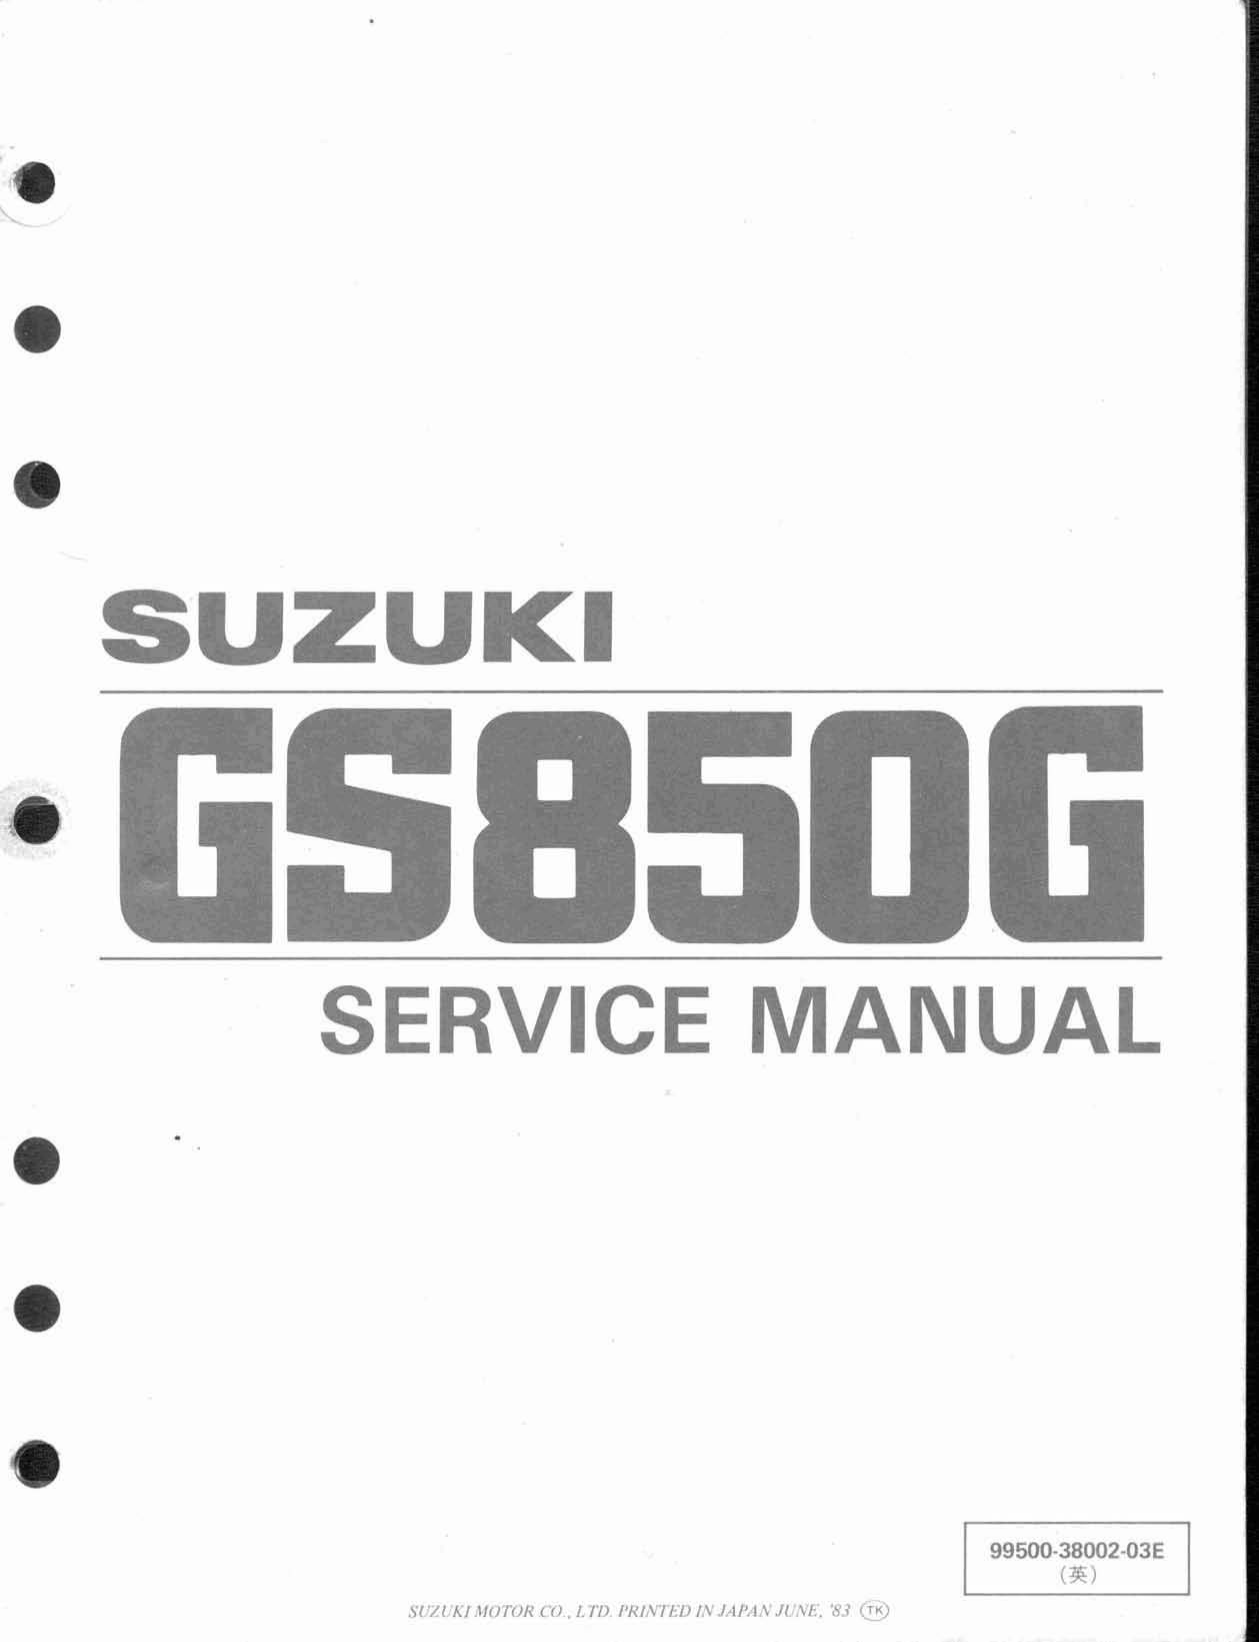 1978-1983 Suzuki GS850G service manual Preview image 6